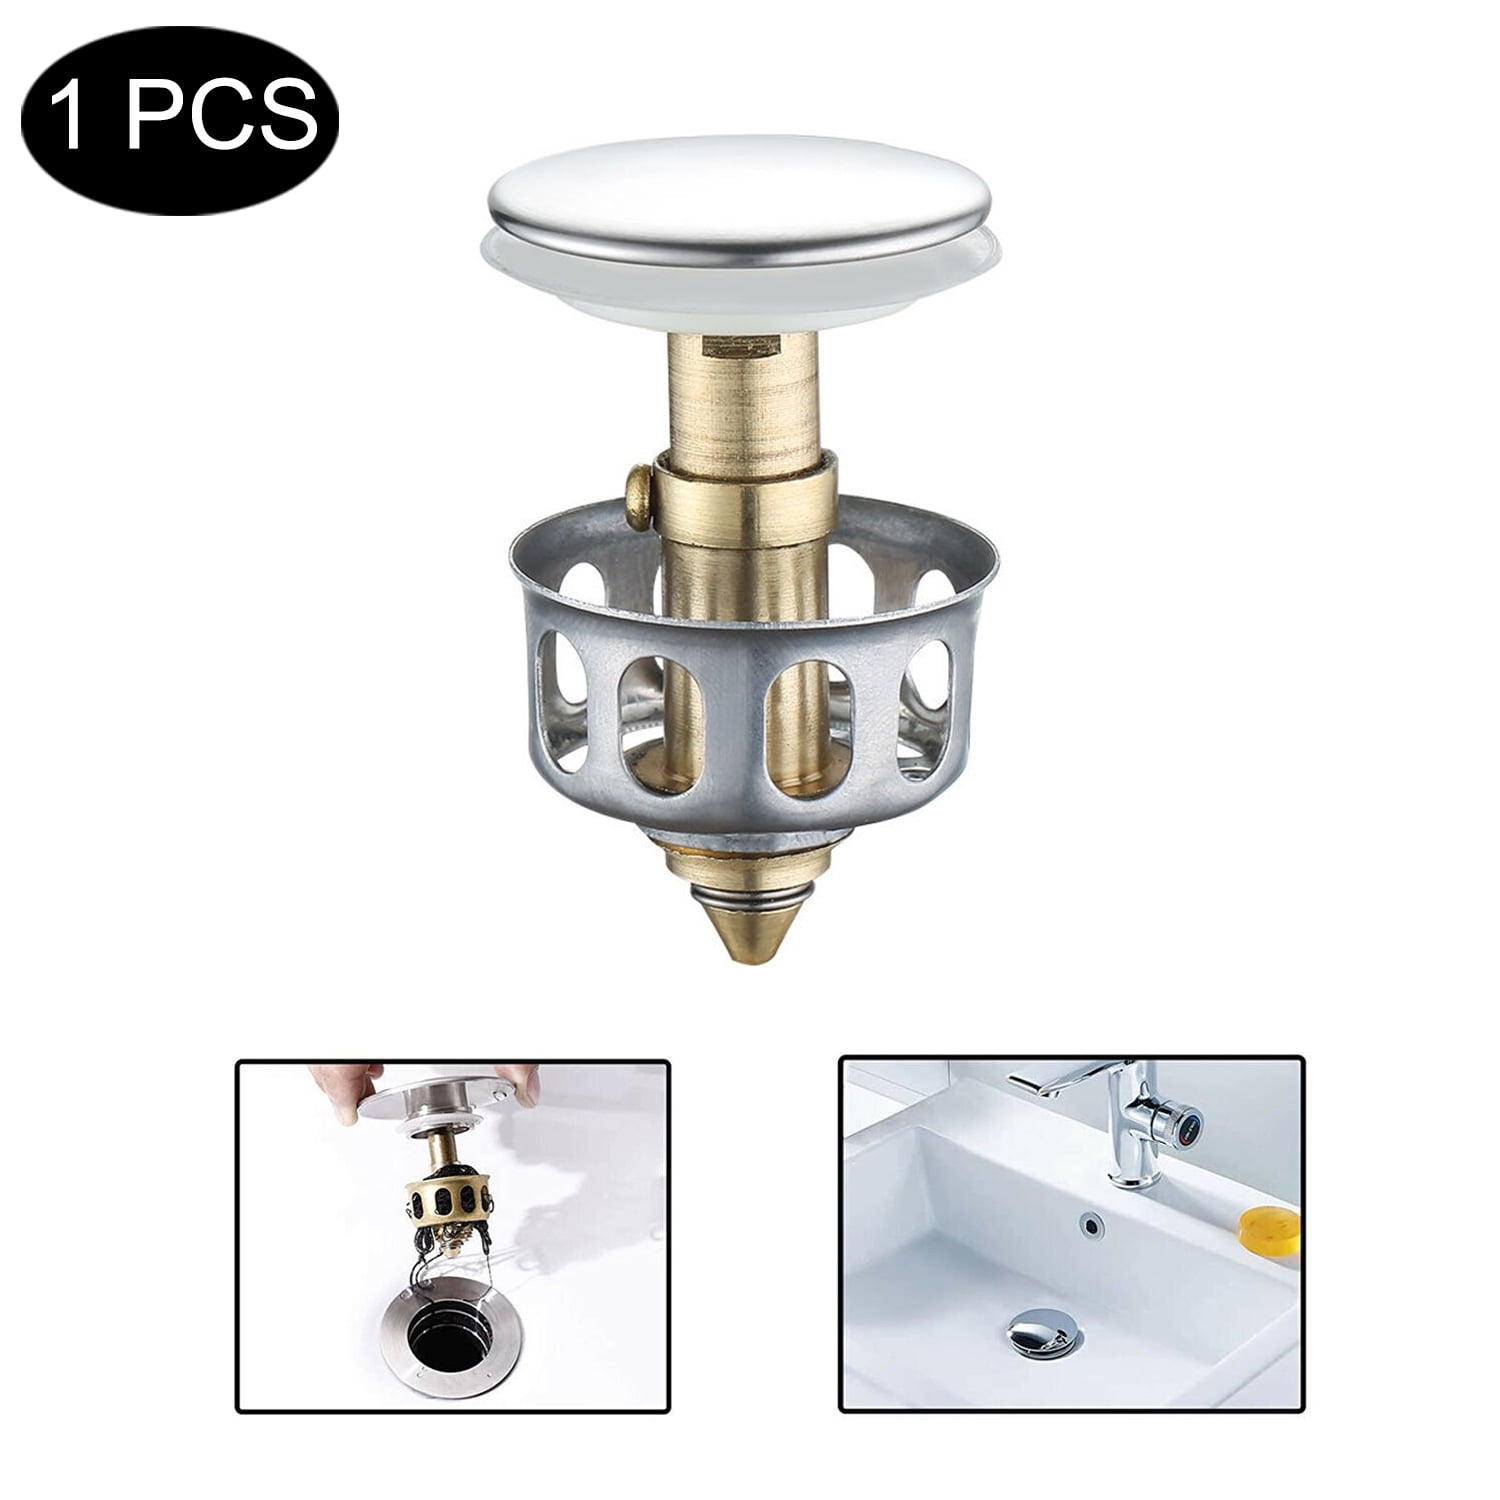 Universal wash basin bounce drain filter Pop Up Bathroom Sink  Drain Plug NEW 